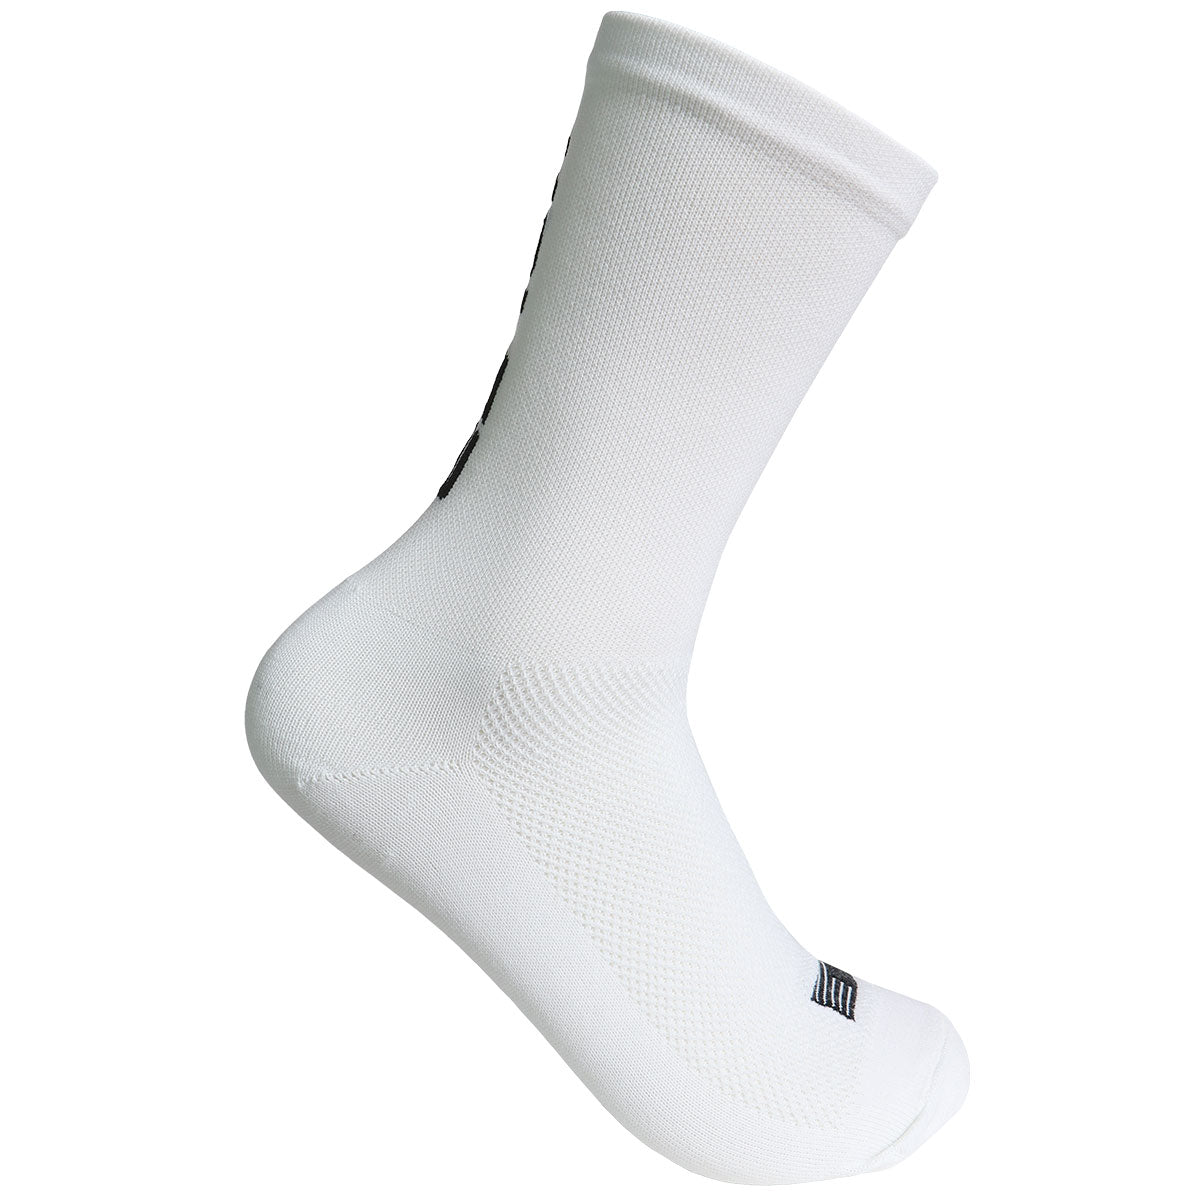 Shires Airflow Turnout Socks - White